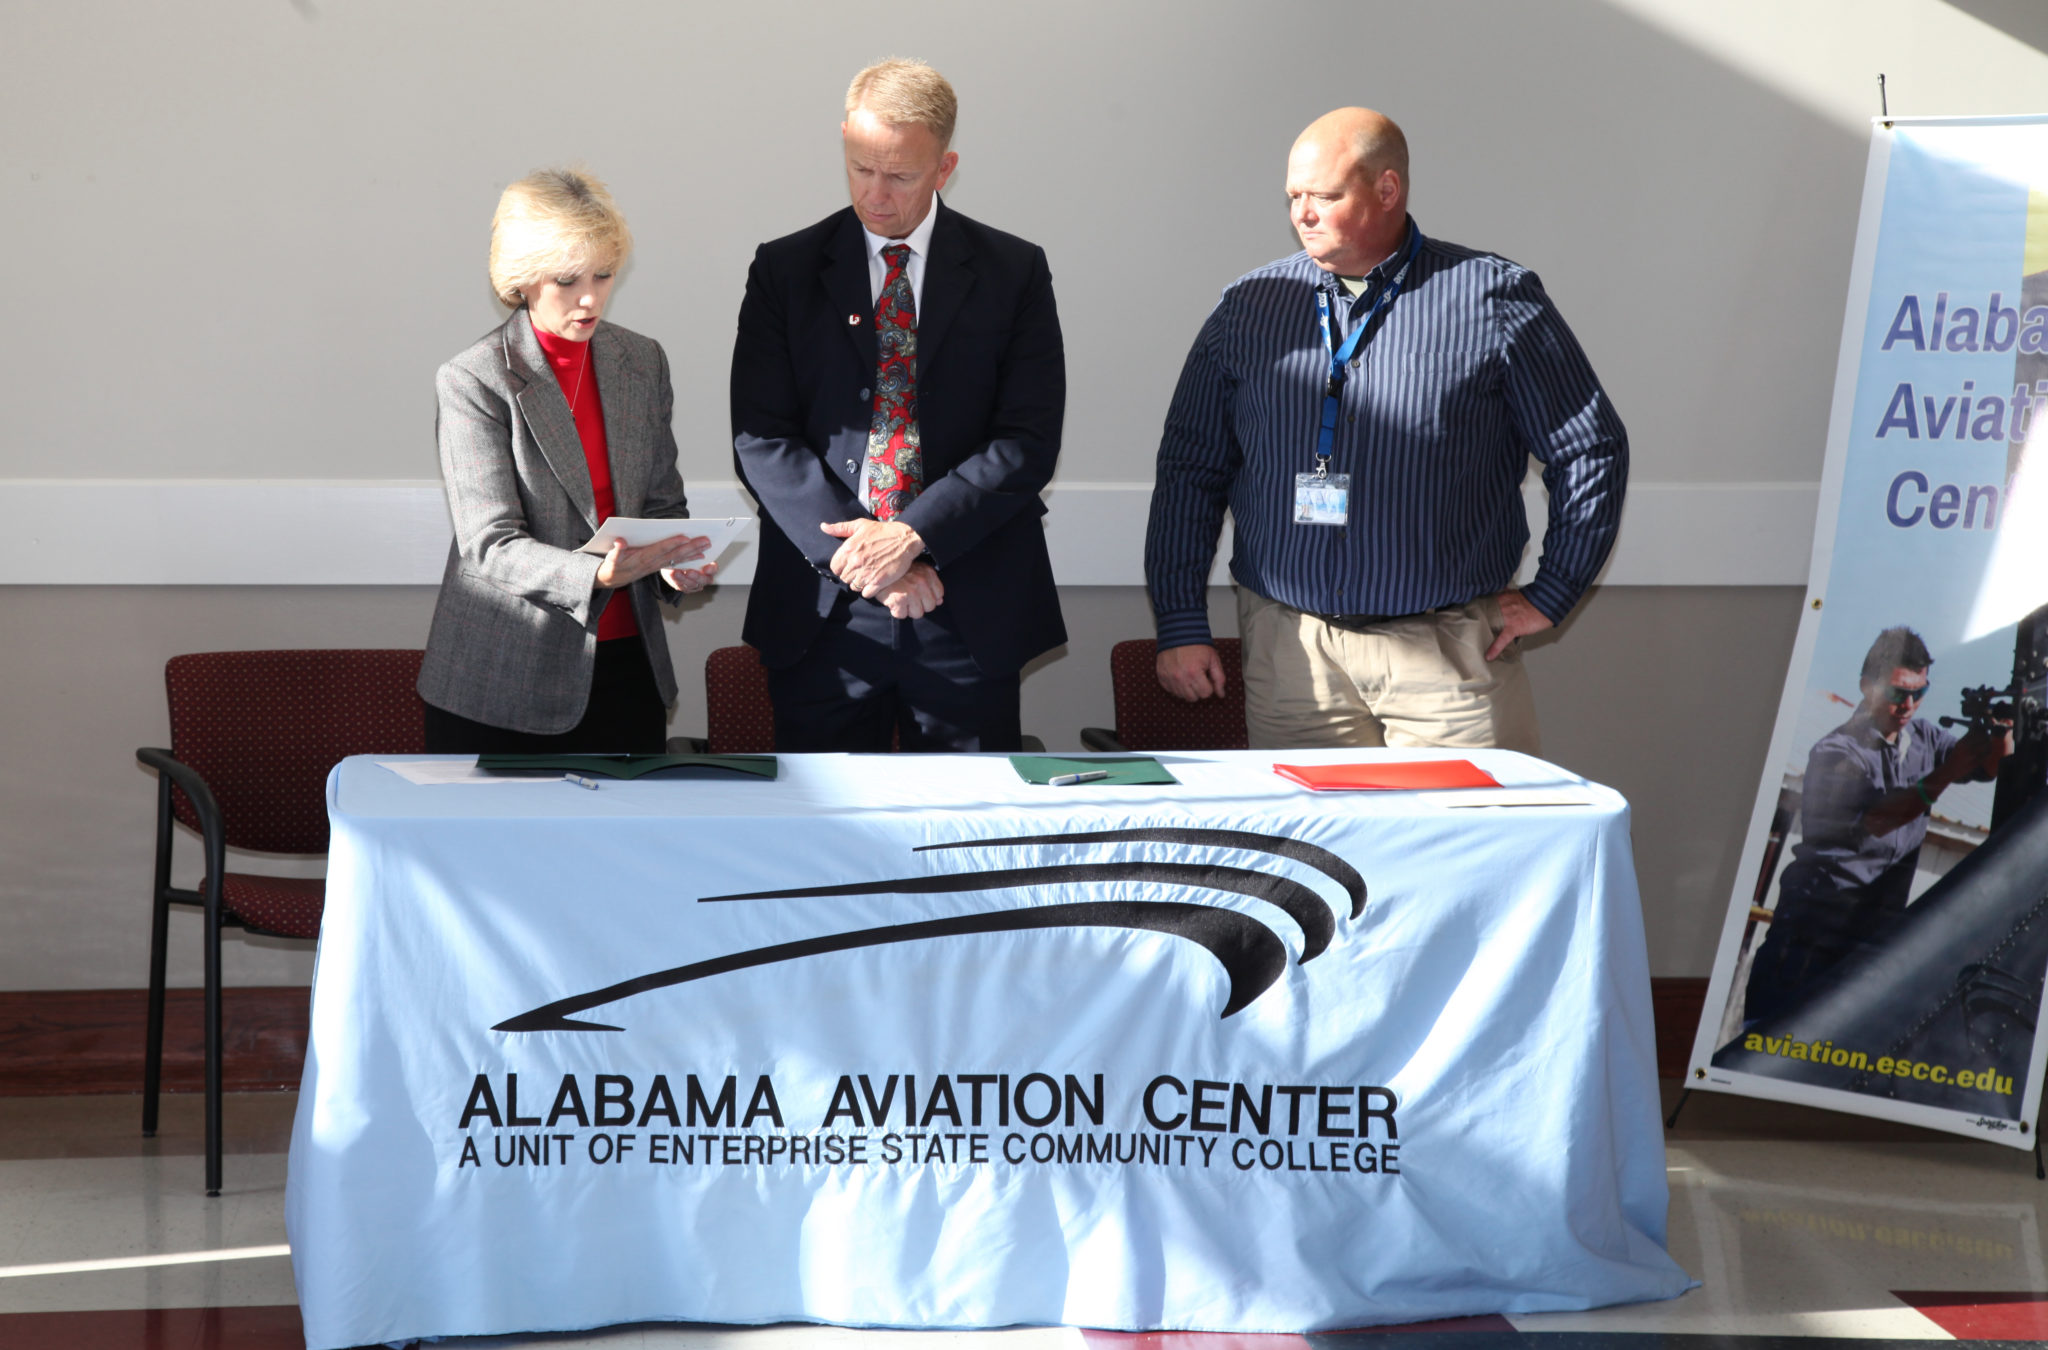 Alabama Aviation Center and L-3 Army Fleet Support establish a formal alliance